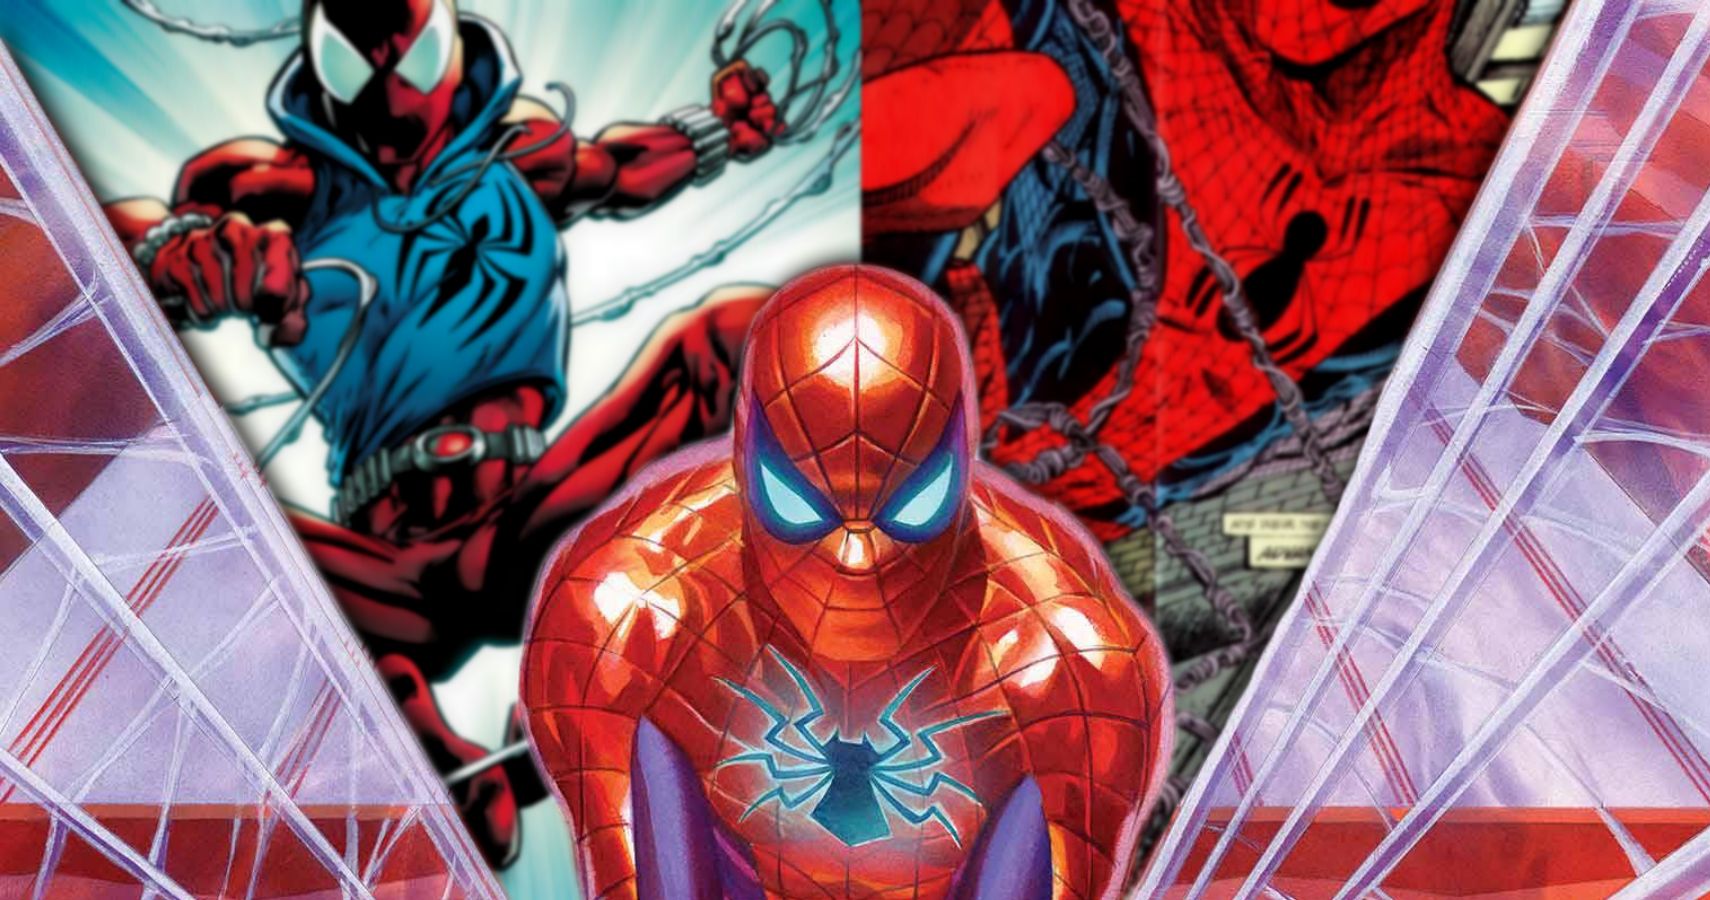 ultimate spiderman symbol